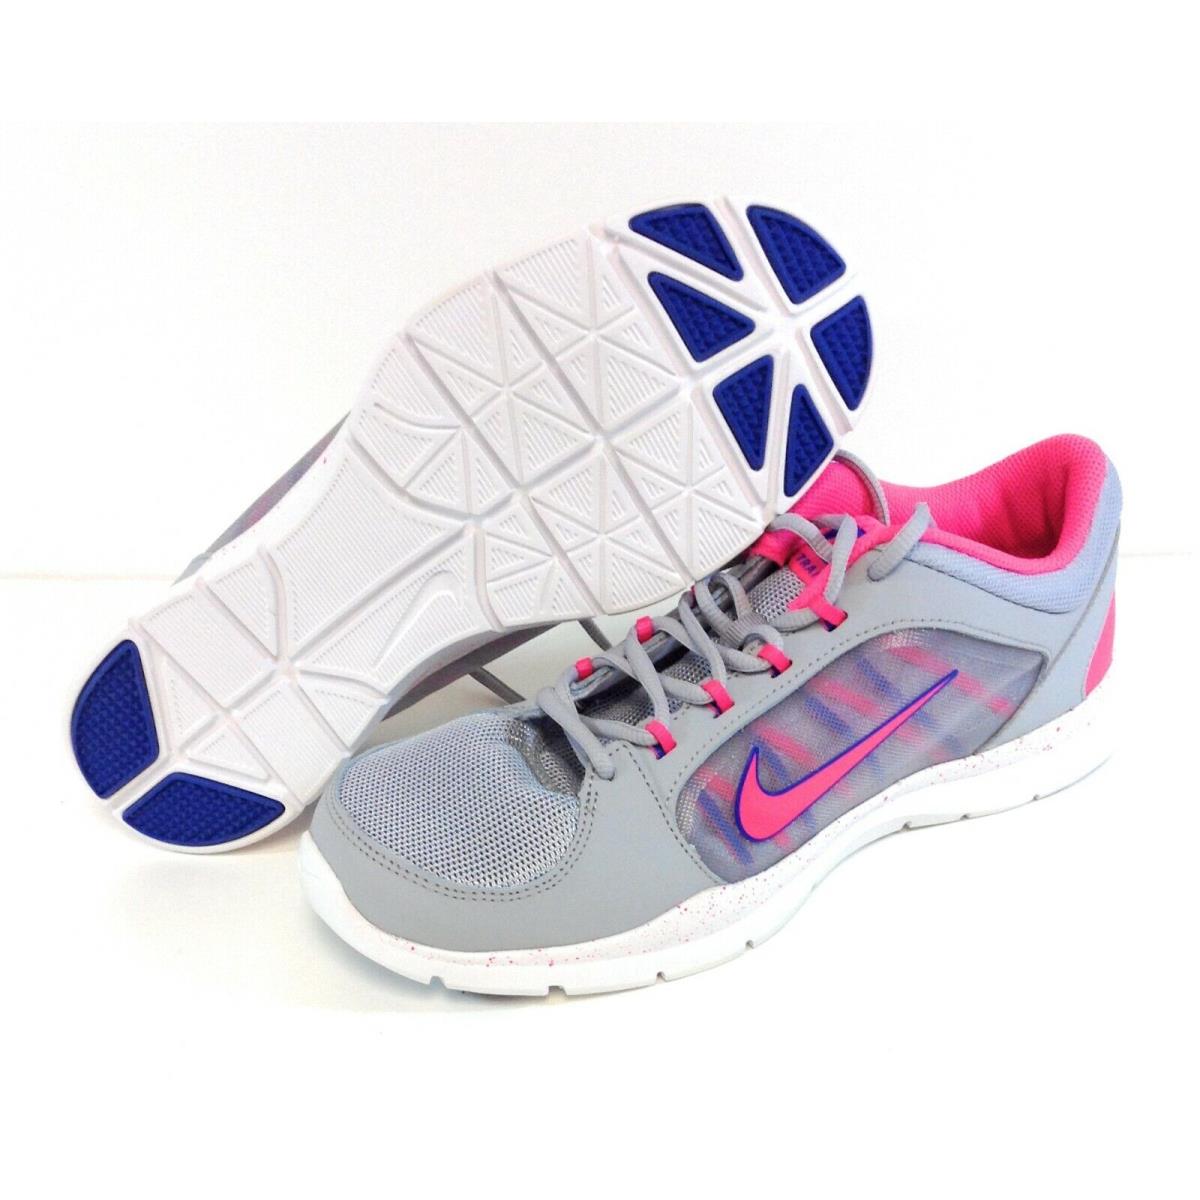 Womens Nike Flex Trainer 4 643083 006 Grey Pink 2014 Deadstock Sneakers Shoes - Grey